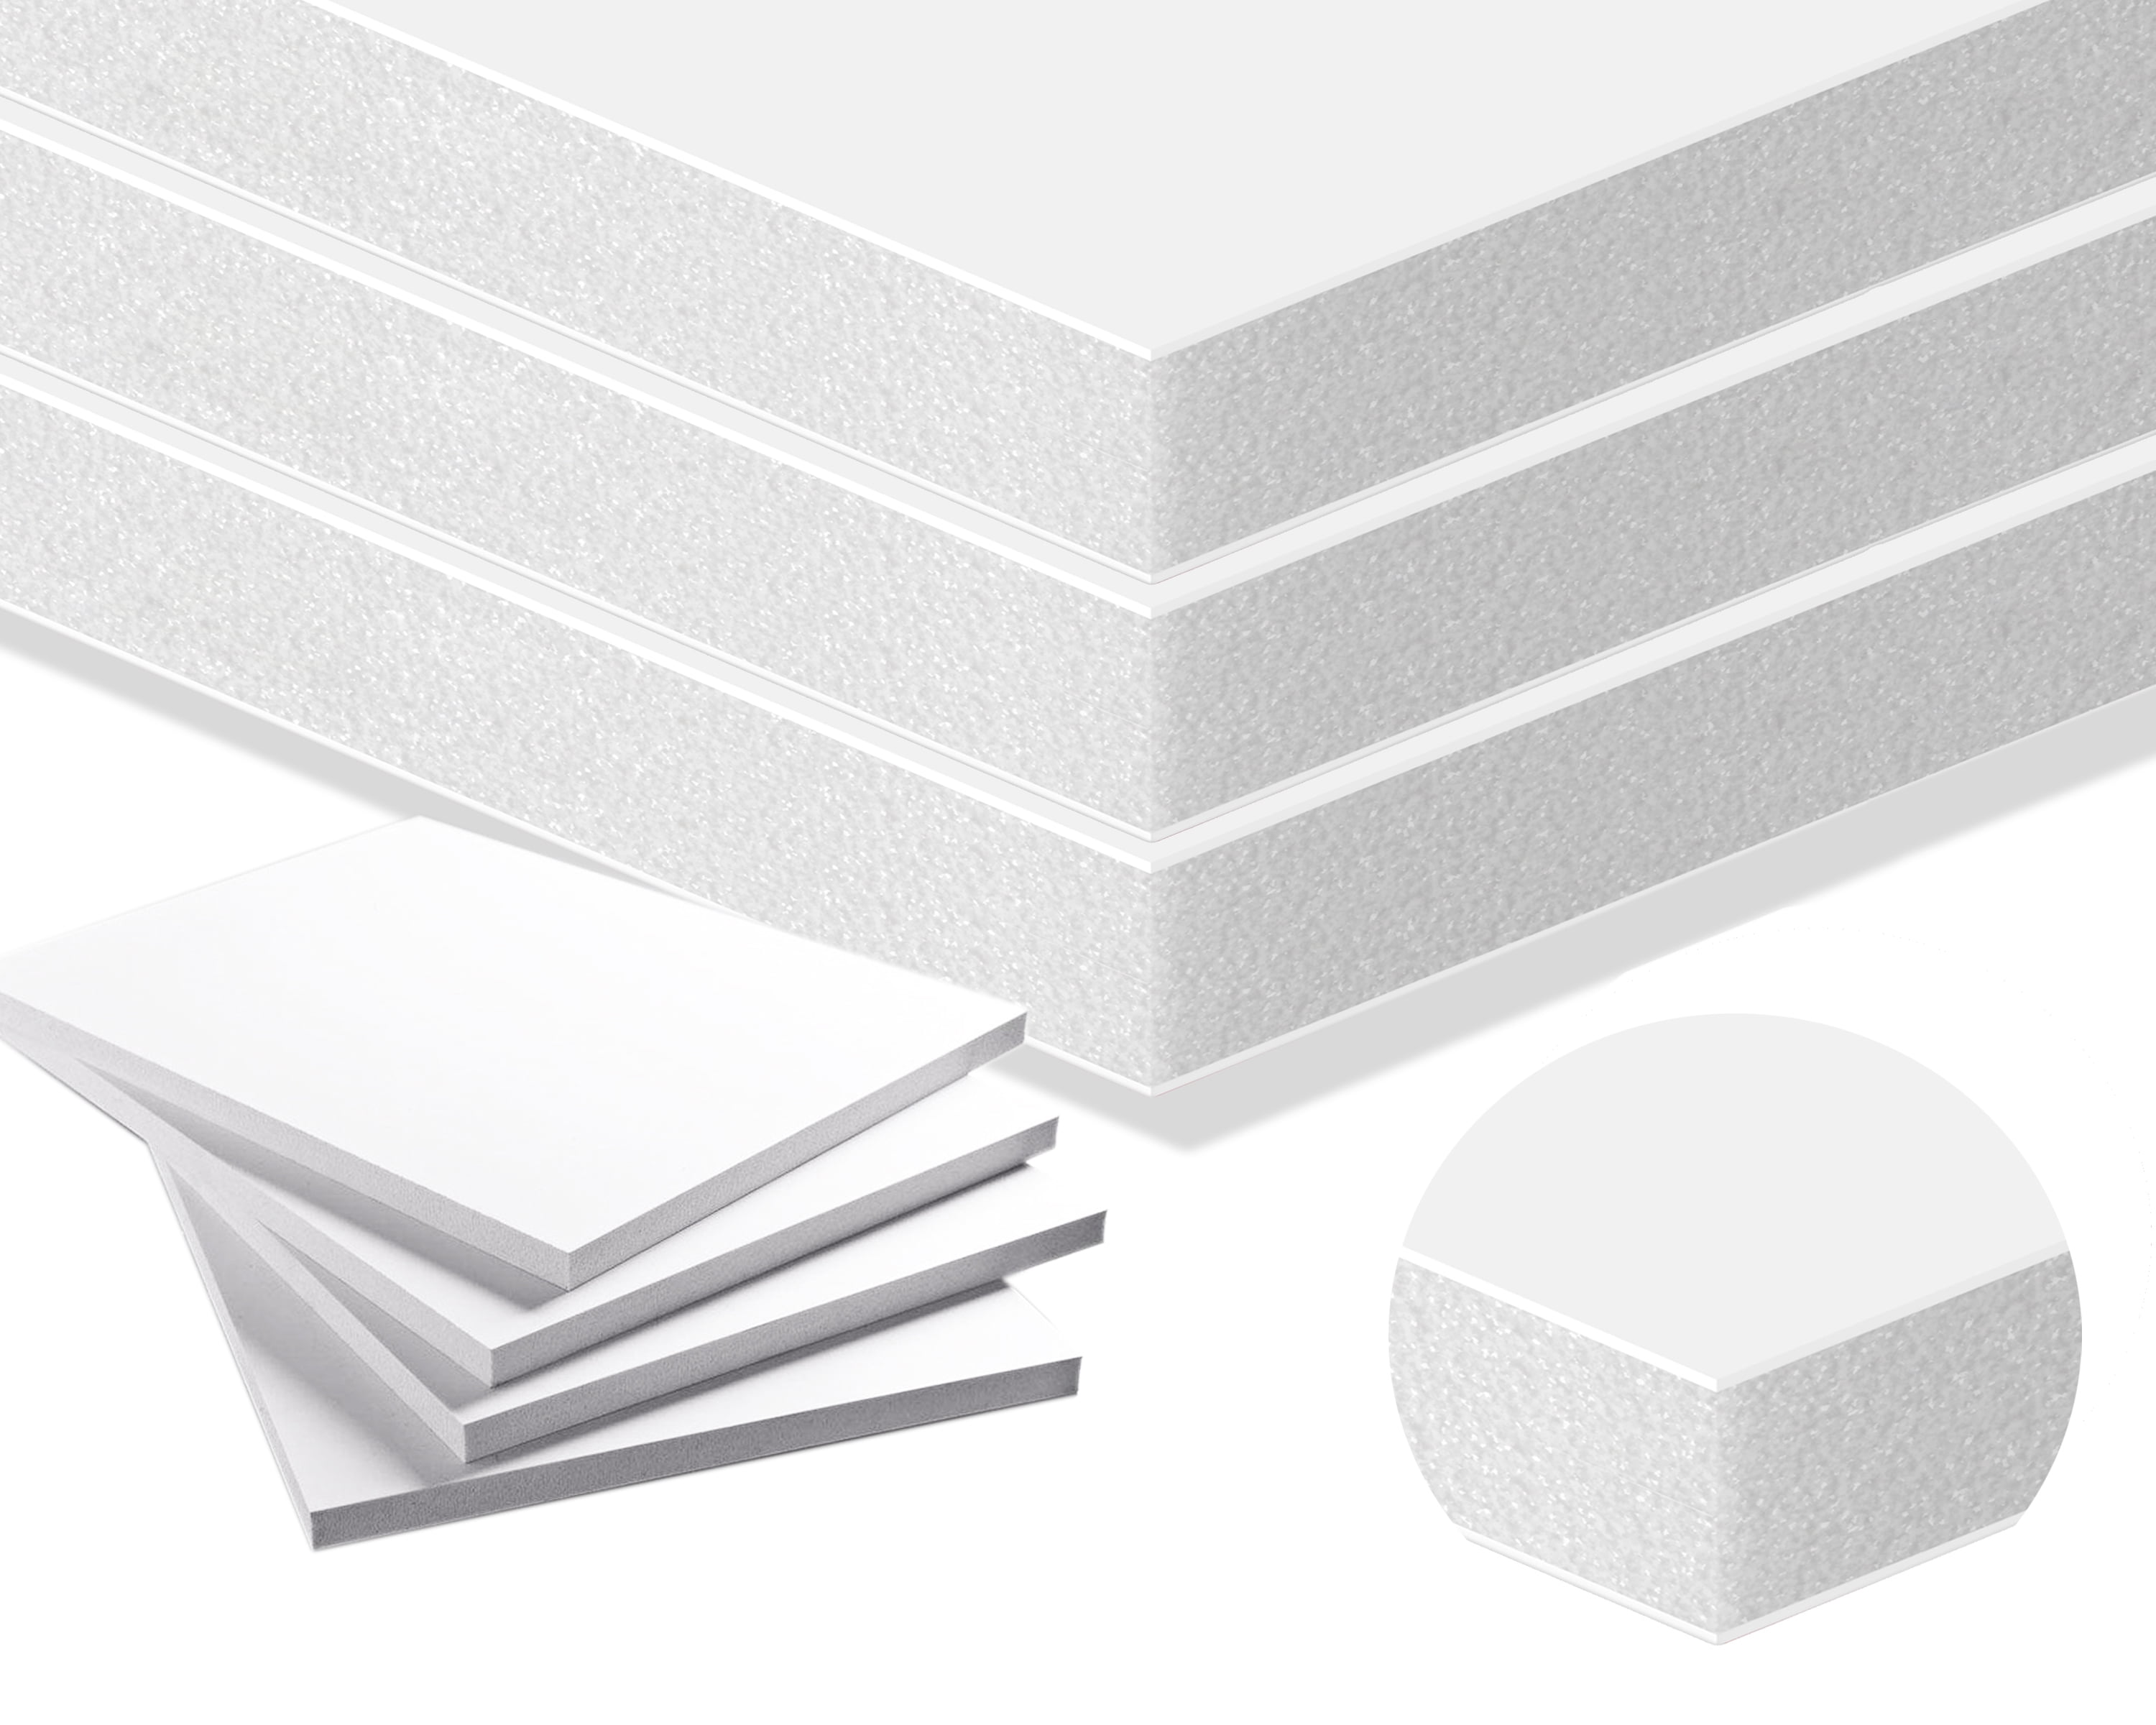 Elmer's 3pk 16 x 20 Foam Presentation Boards - White